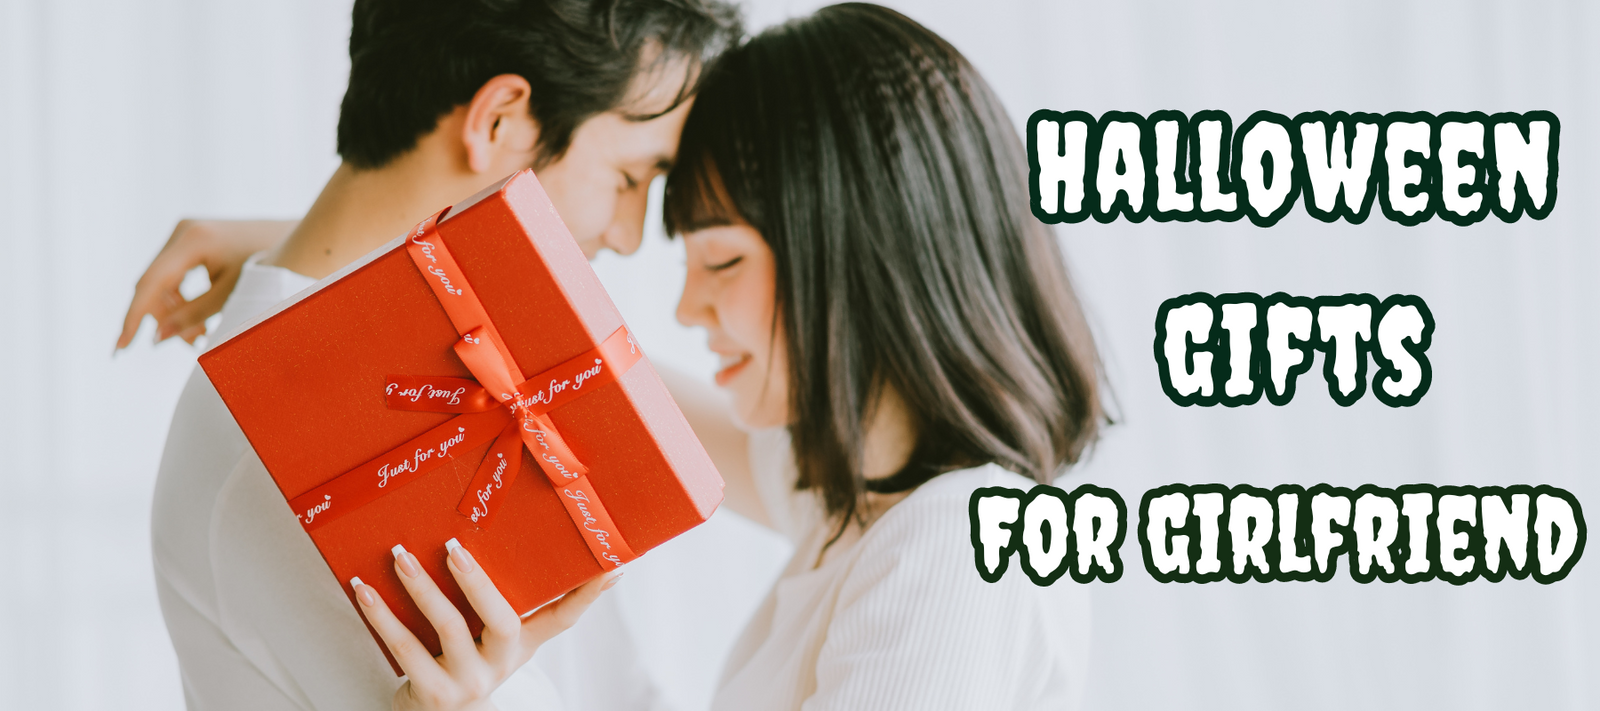 14 Best Valentine Gift Ideas For Your Girlfriend - thatgirlArlene